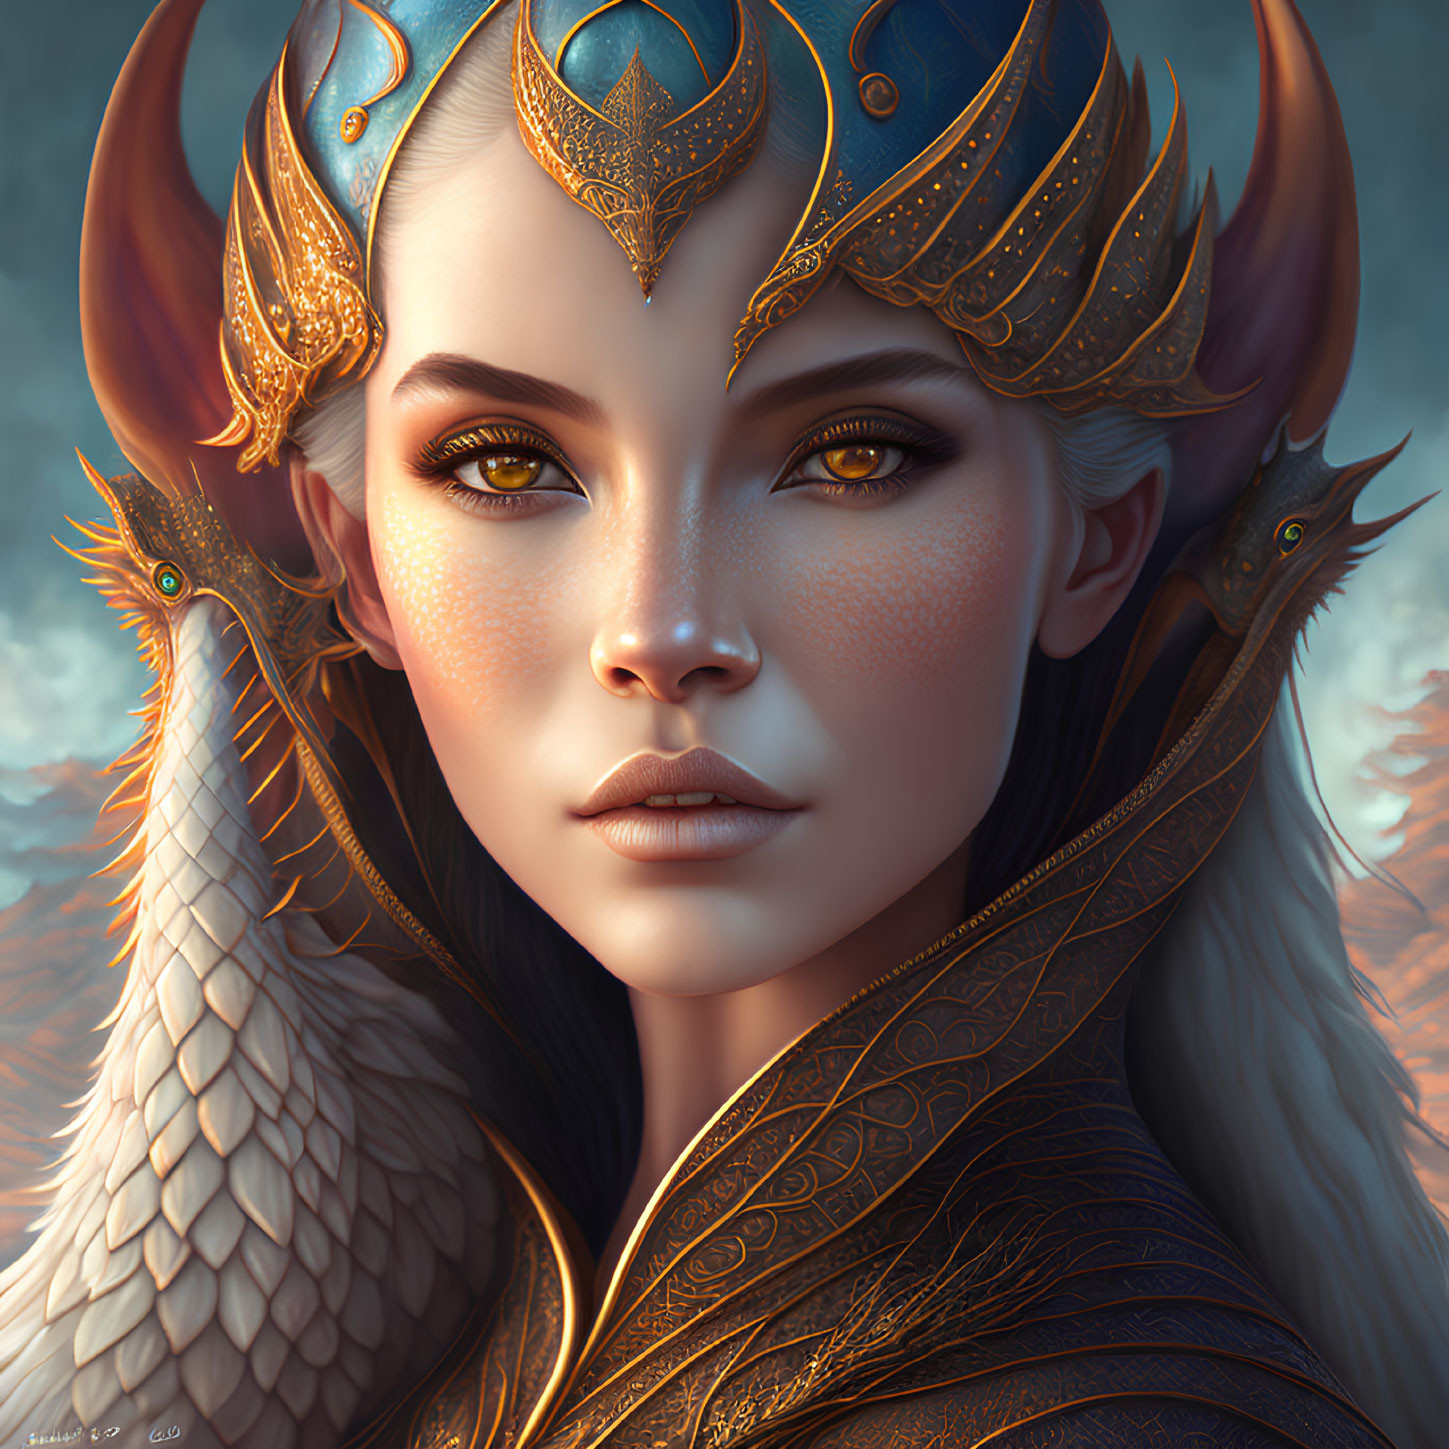 Fantasy Female Portrait with Ornate Golden Headgear and Intricate Bird Motifs